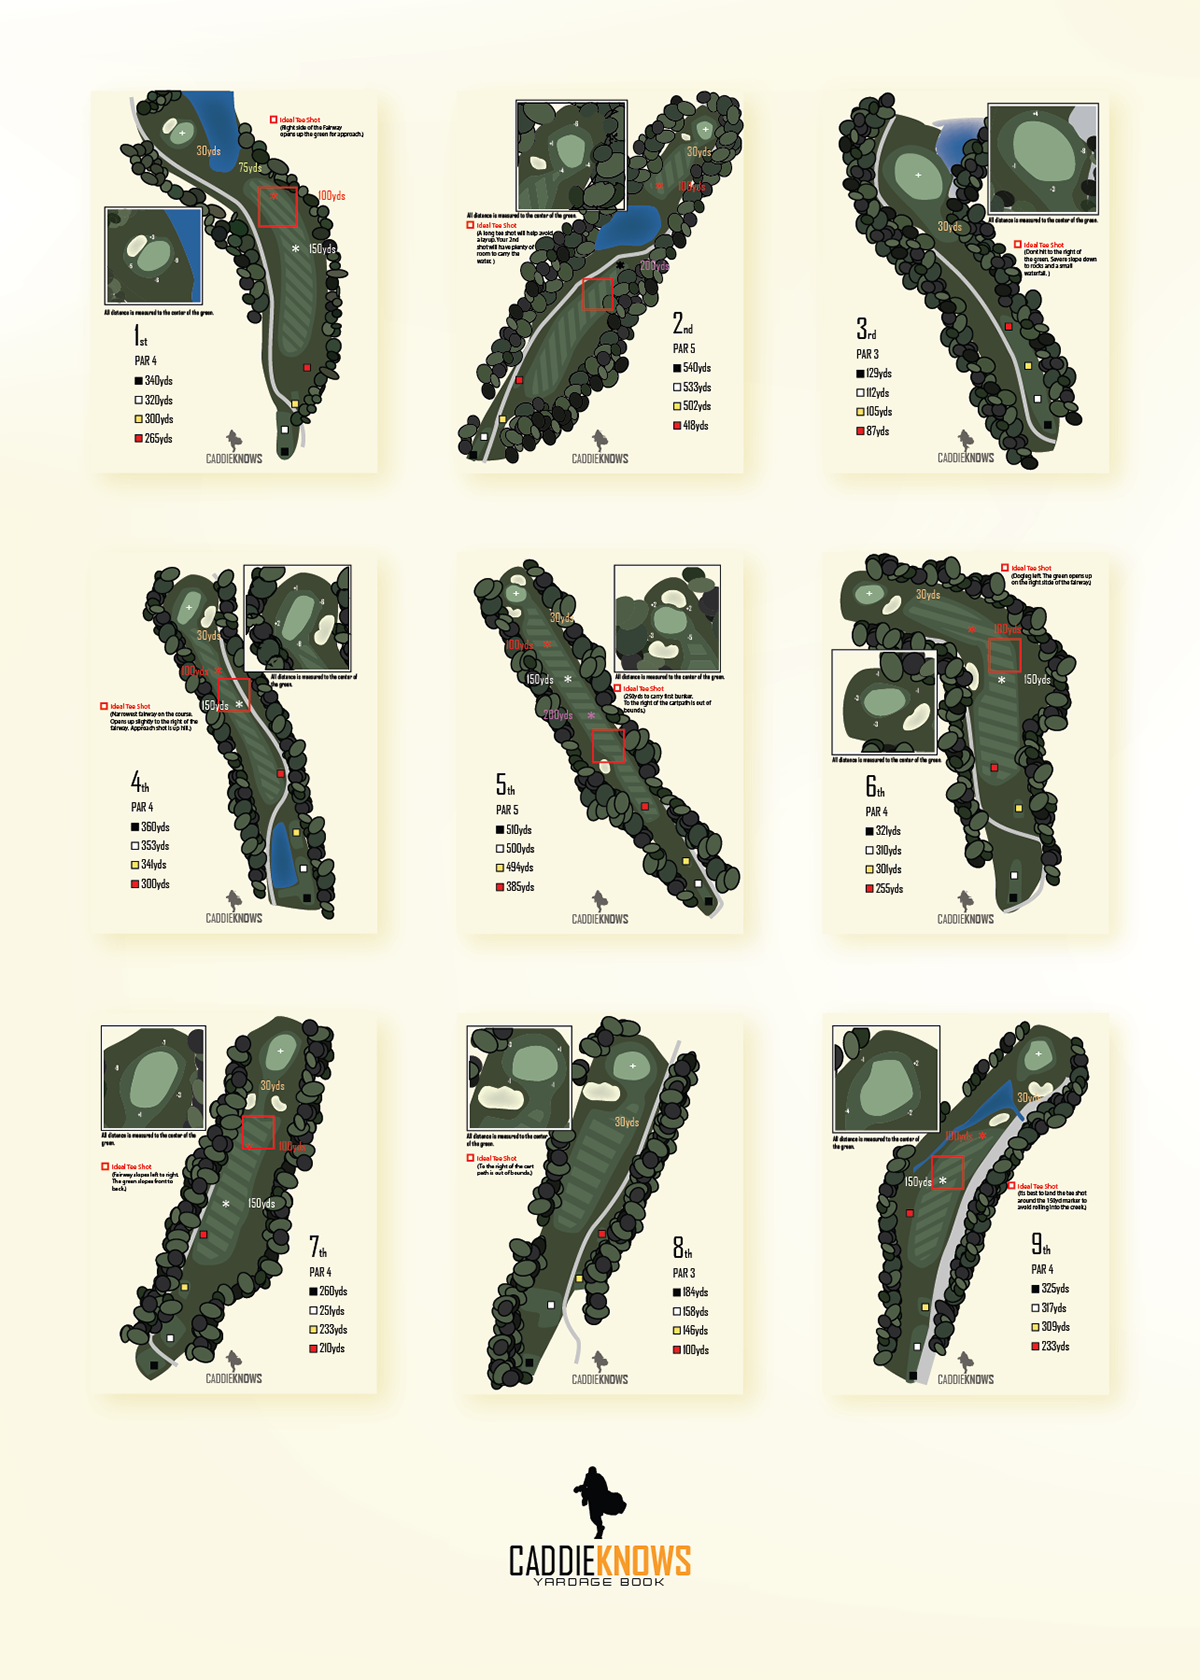 Illustrator photoshop print design  golf yardage book graphic design 